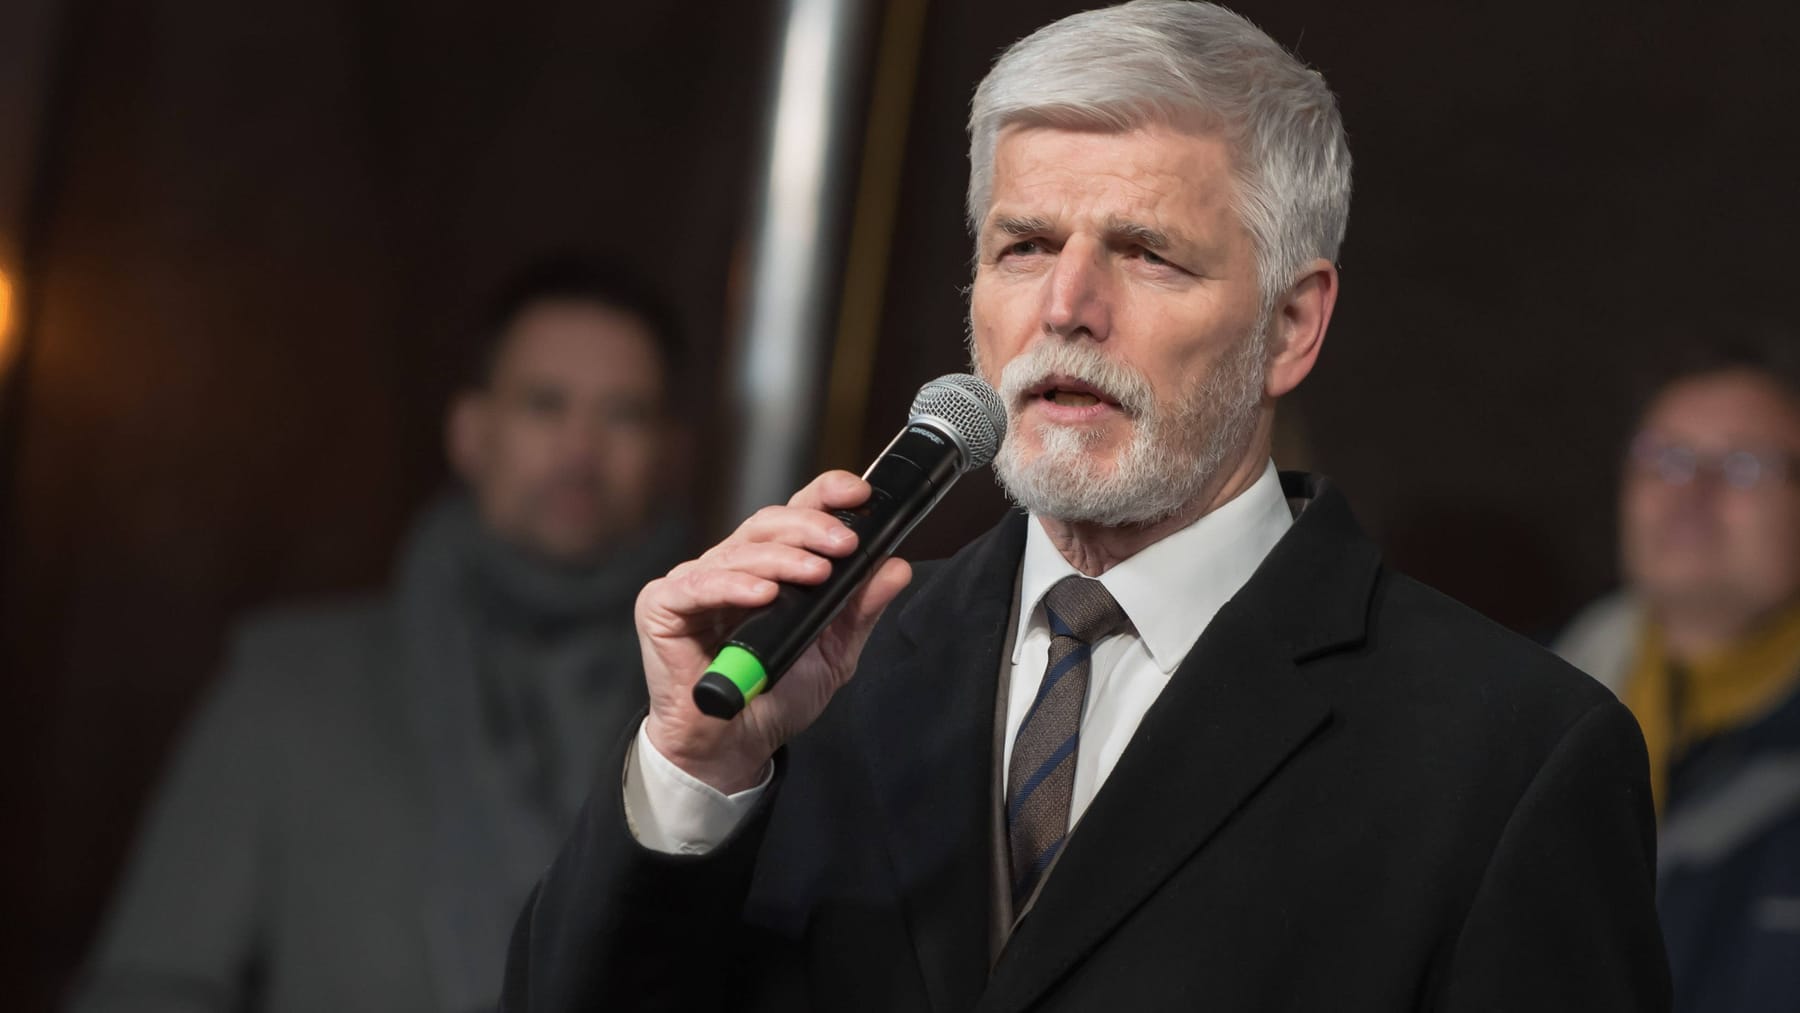 Falsche Todesmeldung platzt in tschechischen Wahlkampf